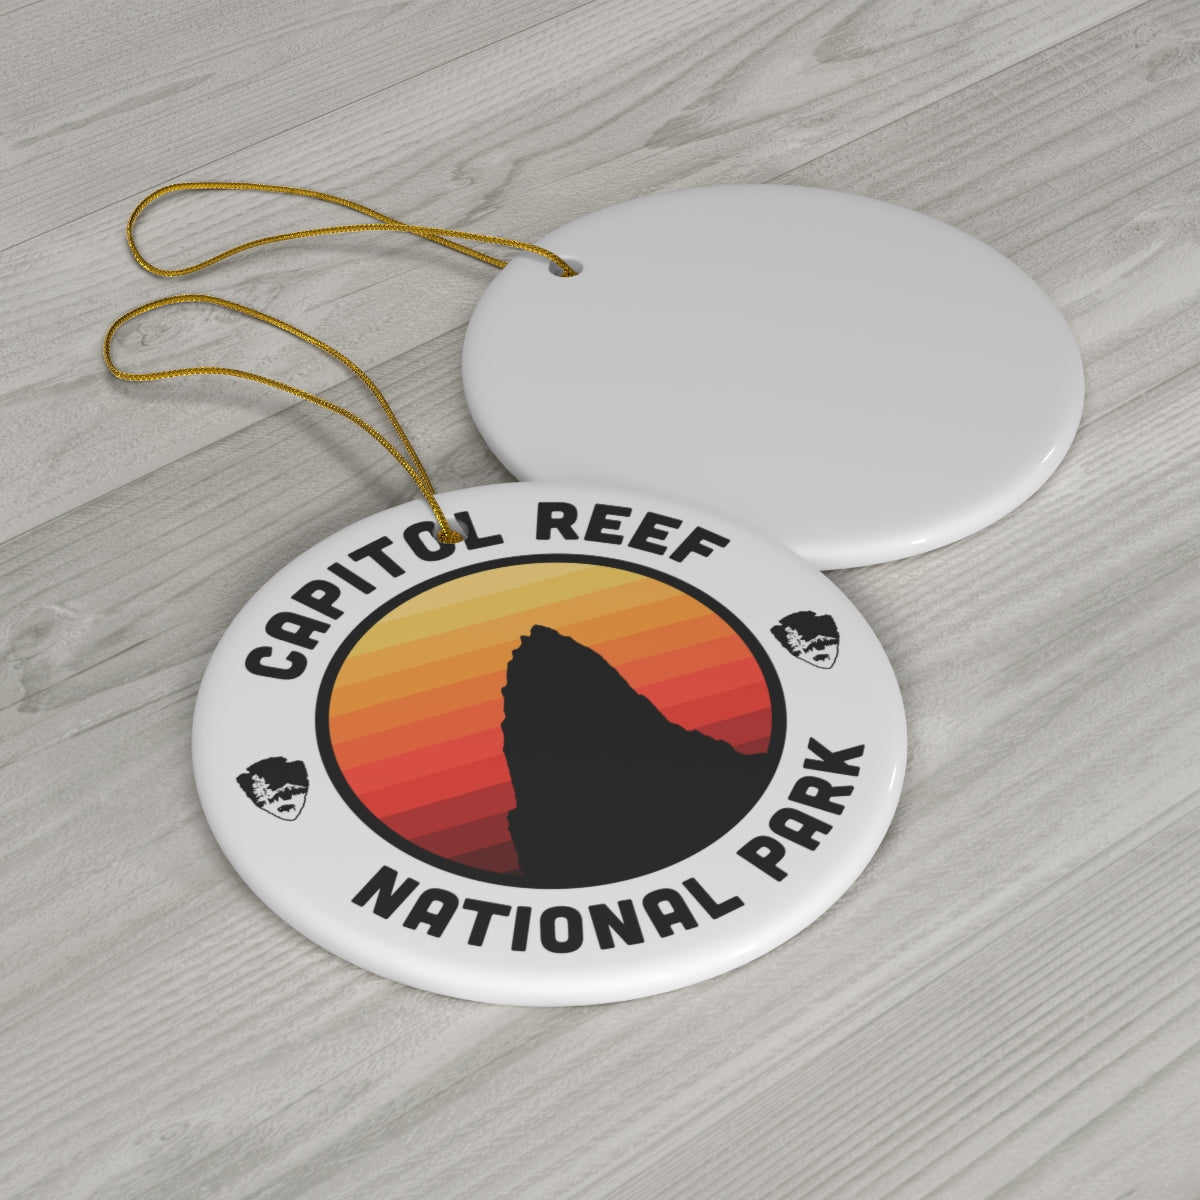 Capitol Reef National Park Ornament - Round Emblem Design